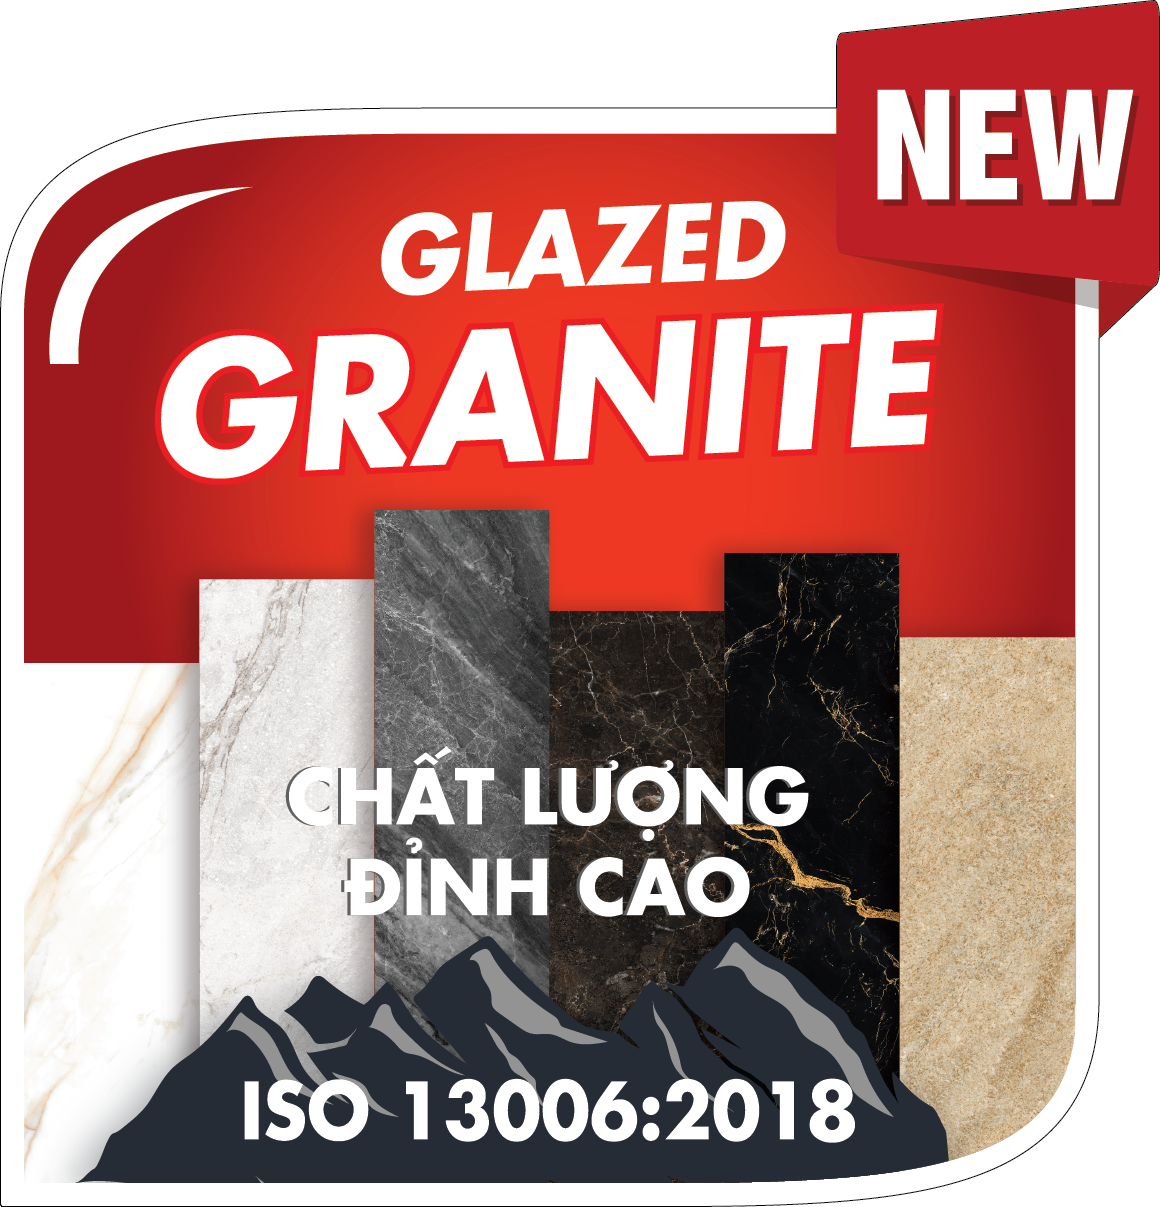 Glazed Granite